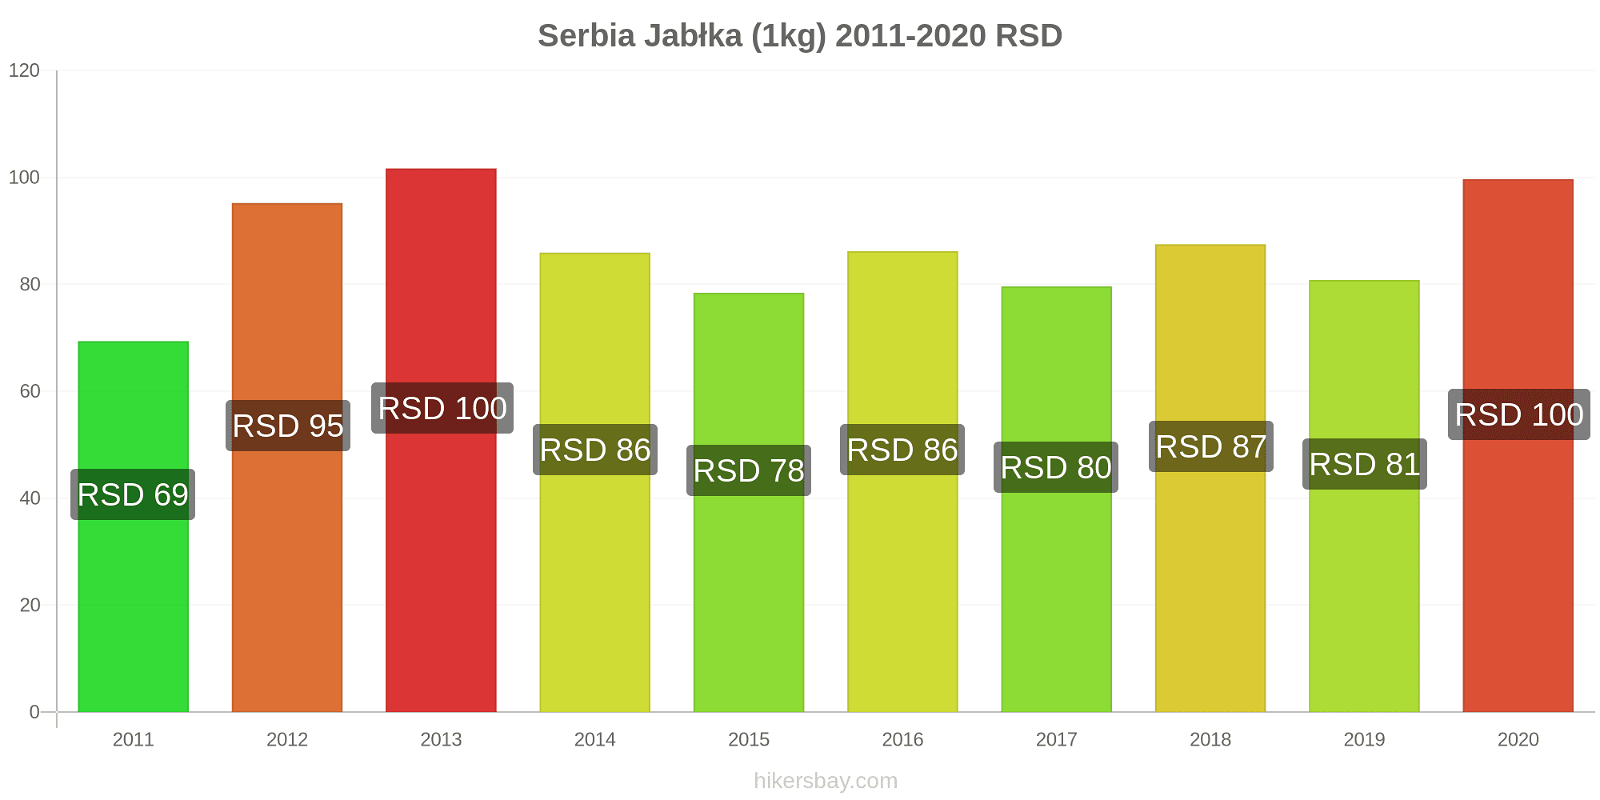 Serbia zmiany cen Jabłka (1kg) hikersbay.com